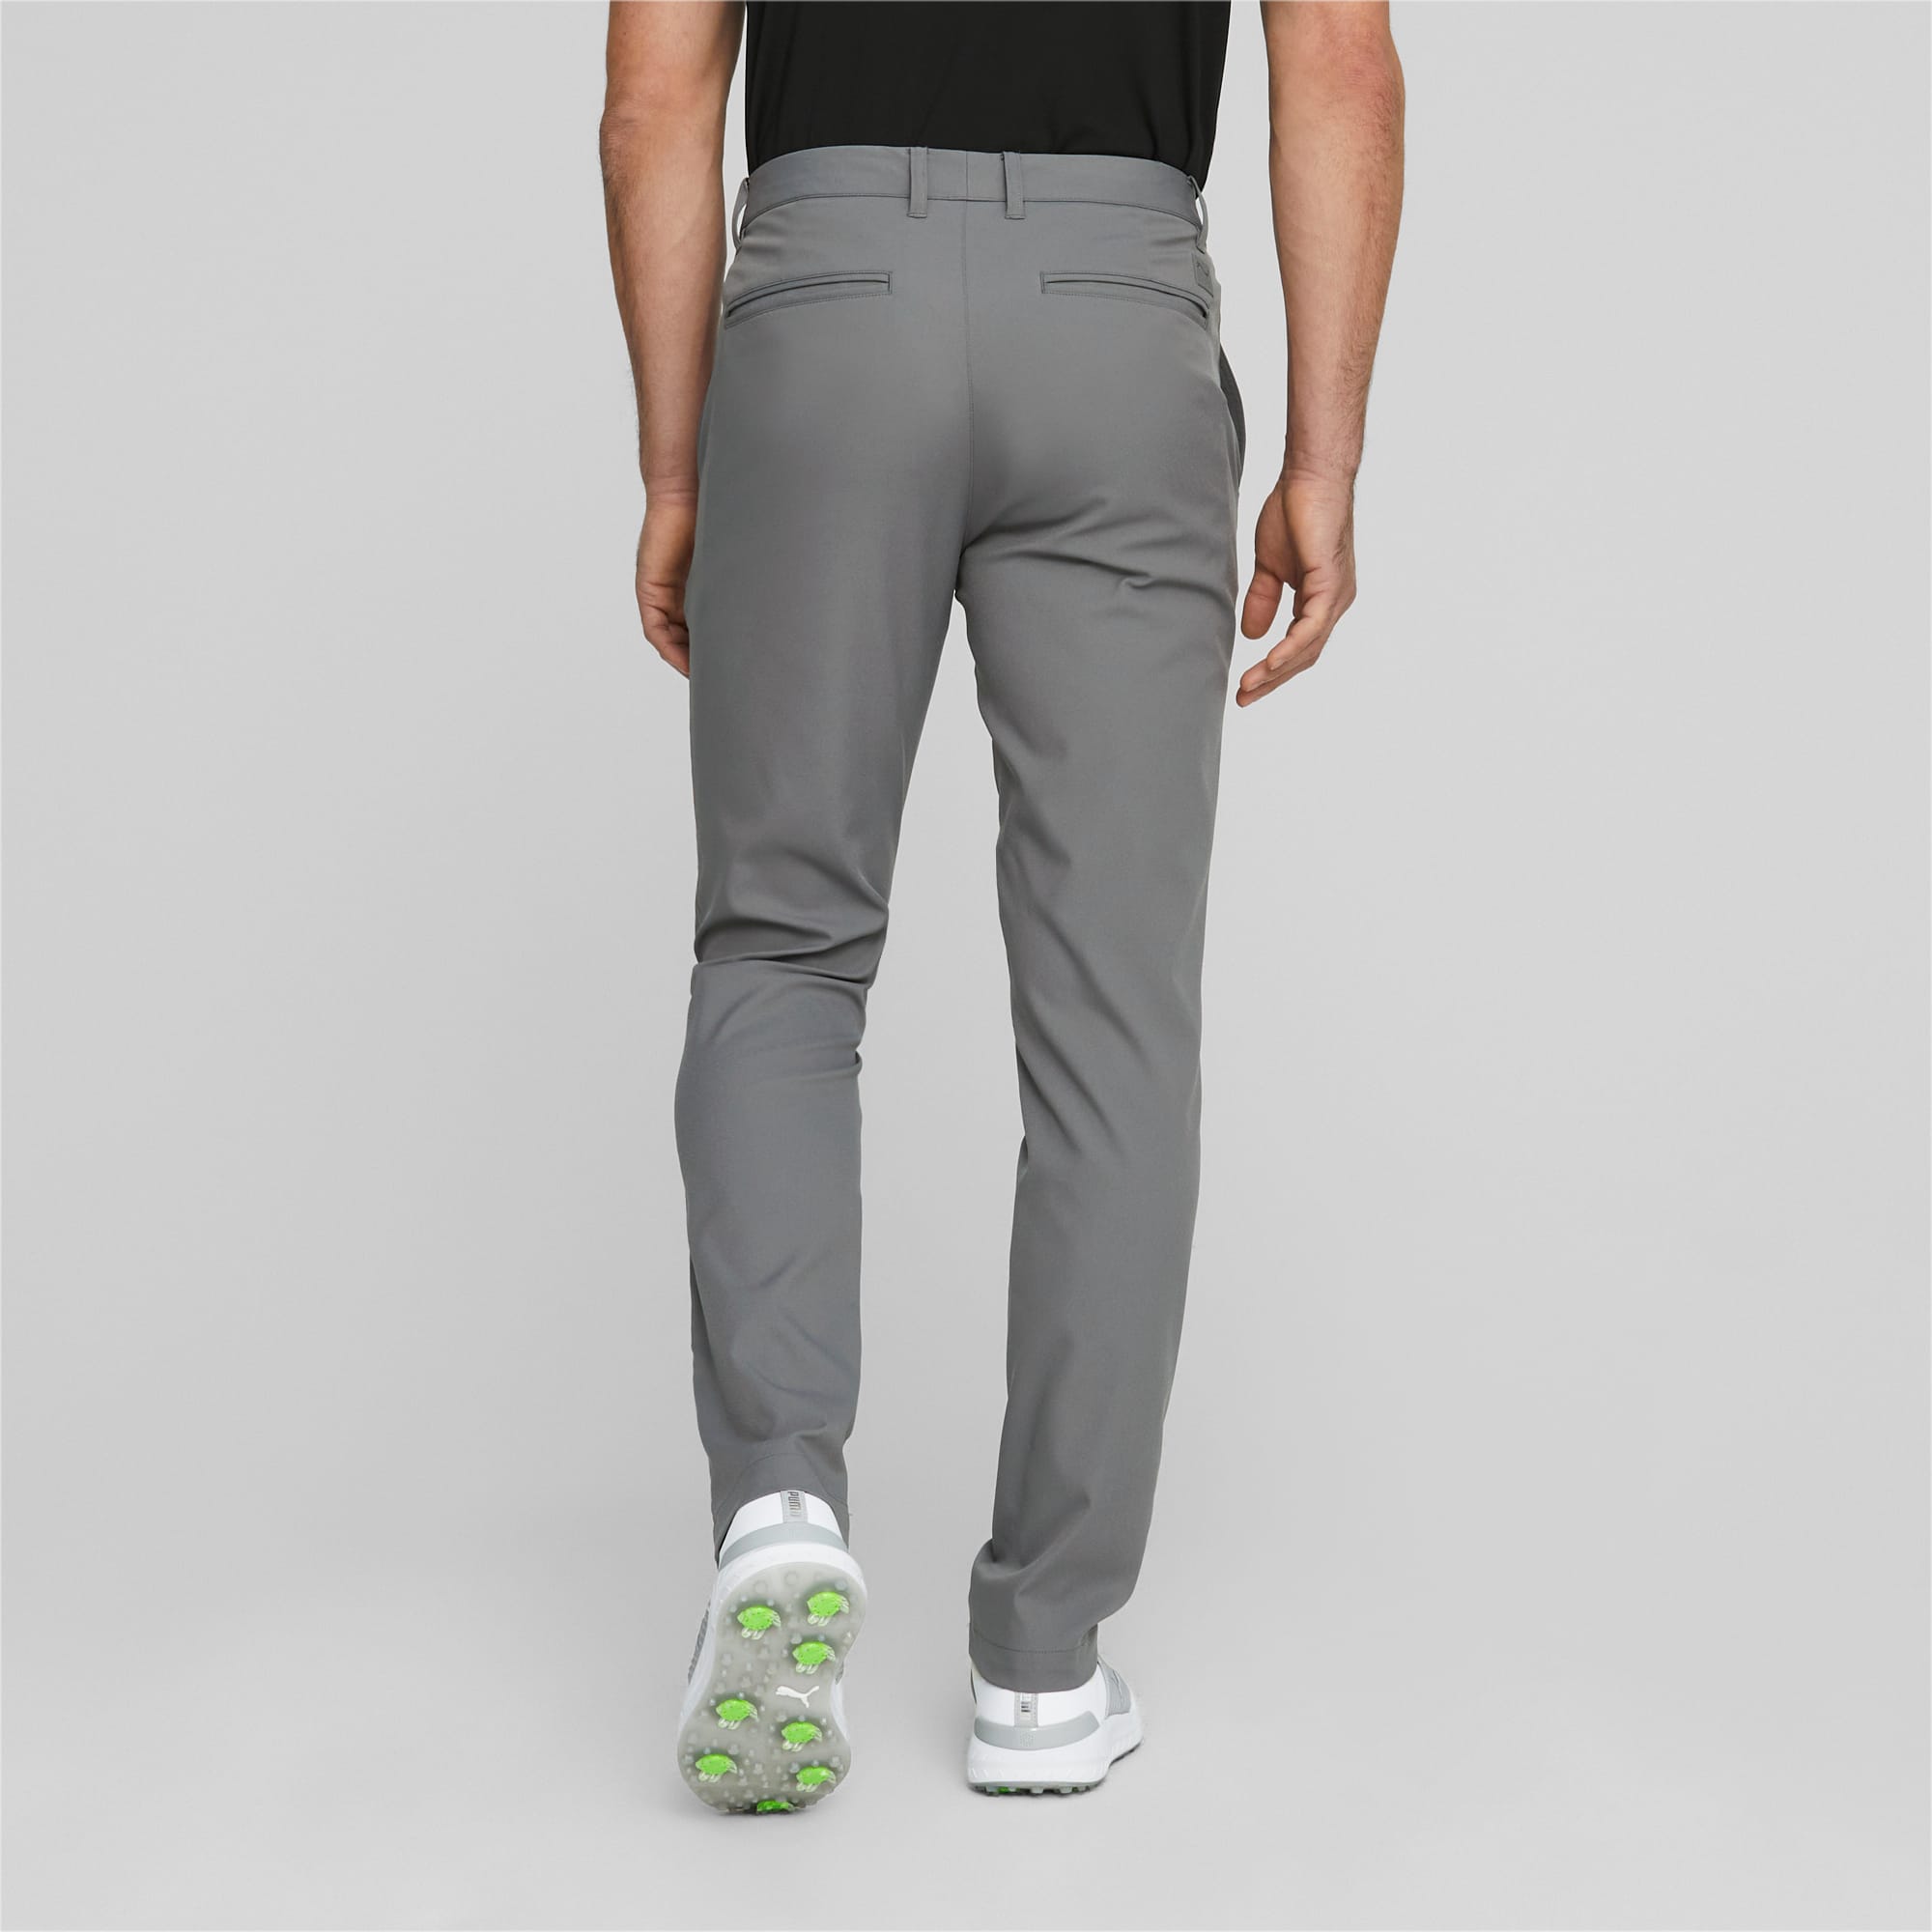 PUMA Dealer Tailored Golf Pants Men, Slate Sky, Size 34/34, Clothing